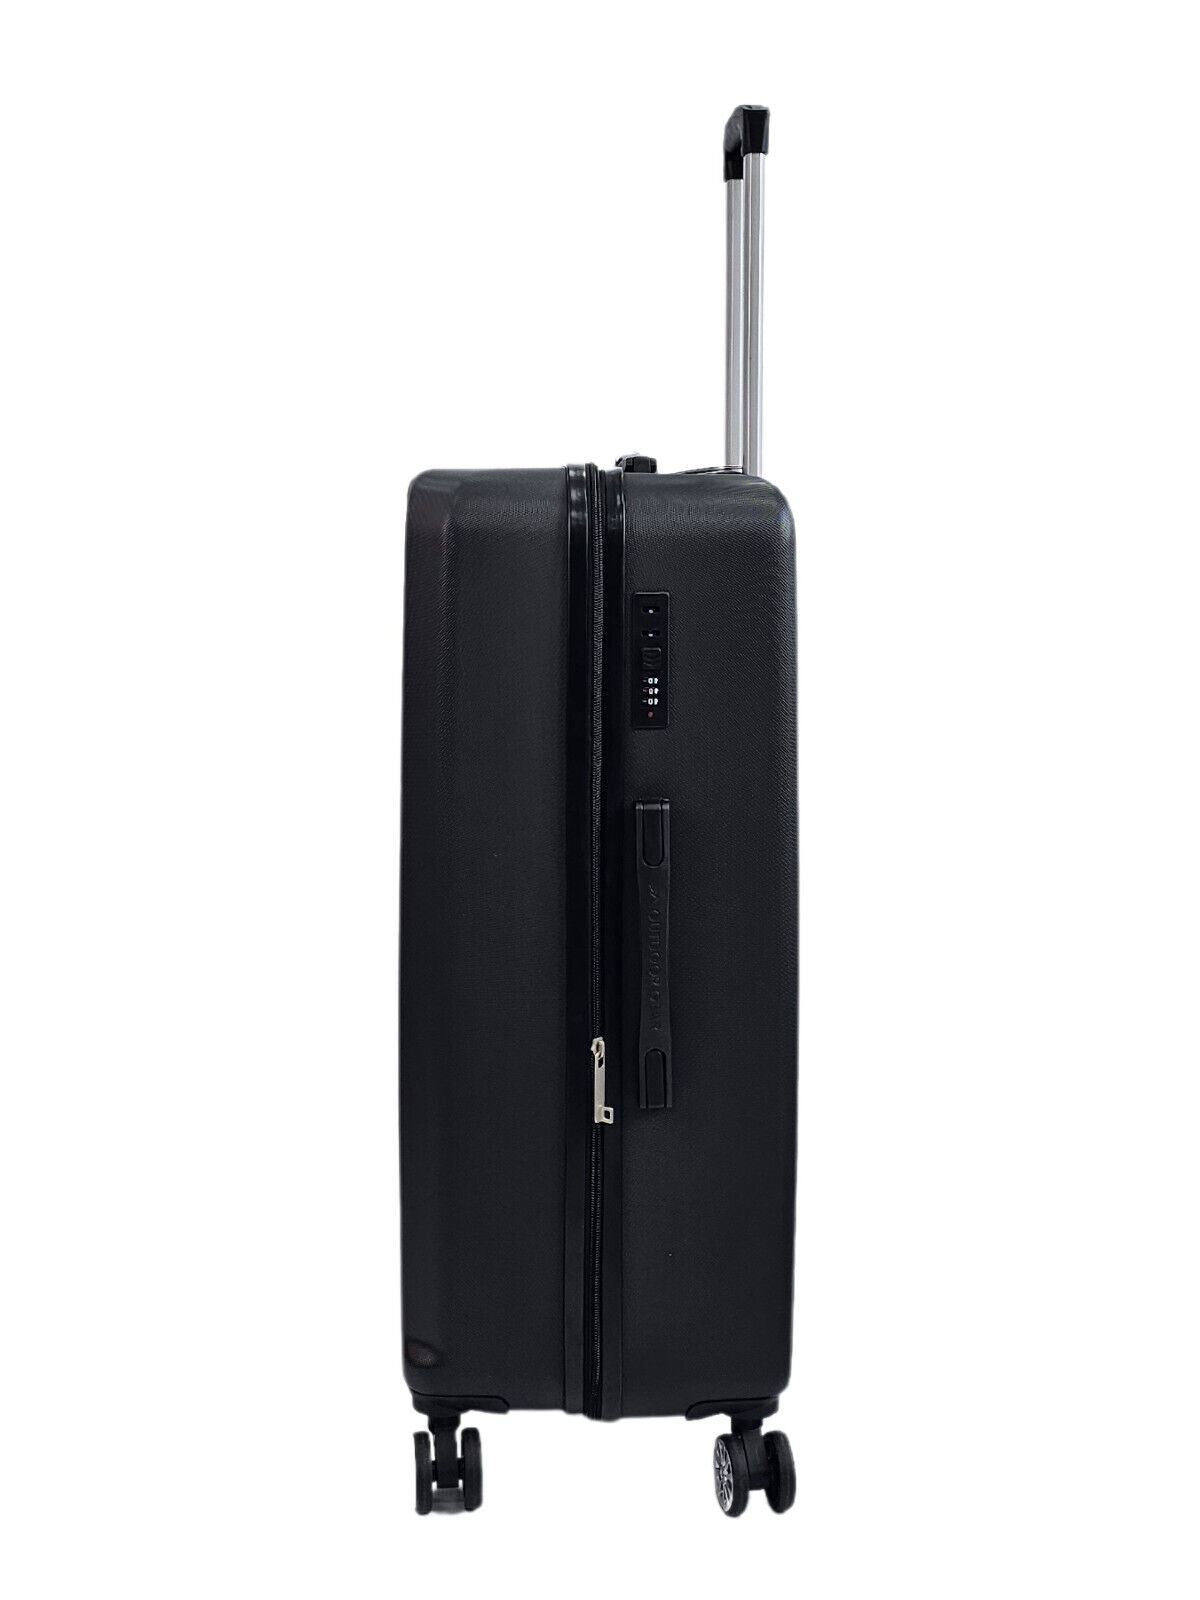 Albertville Large Hard Shell Suitcase in Black